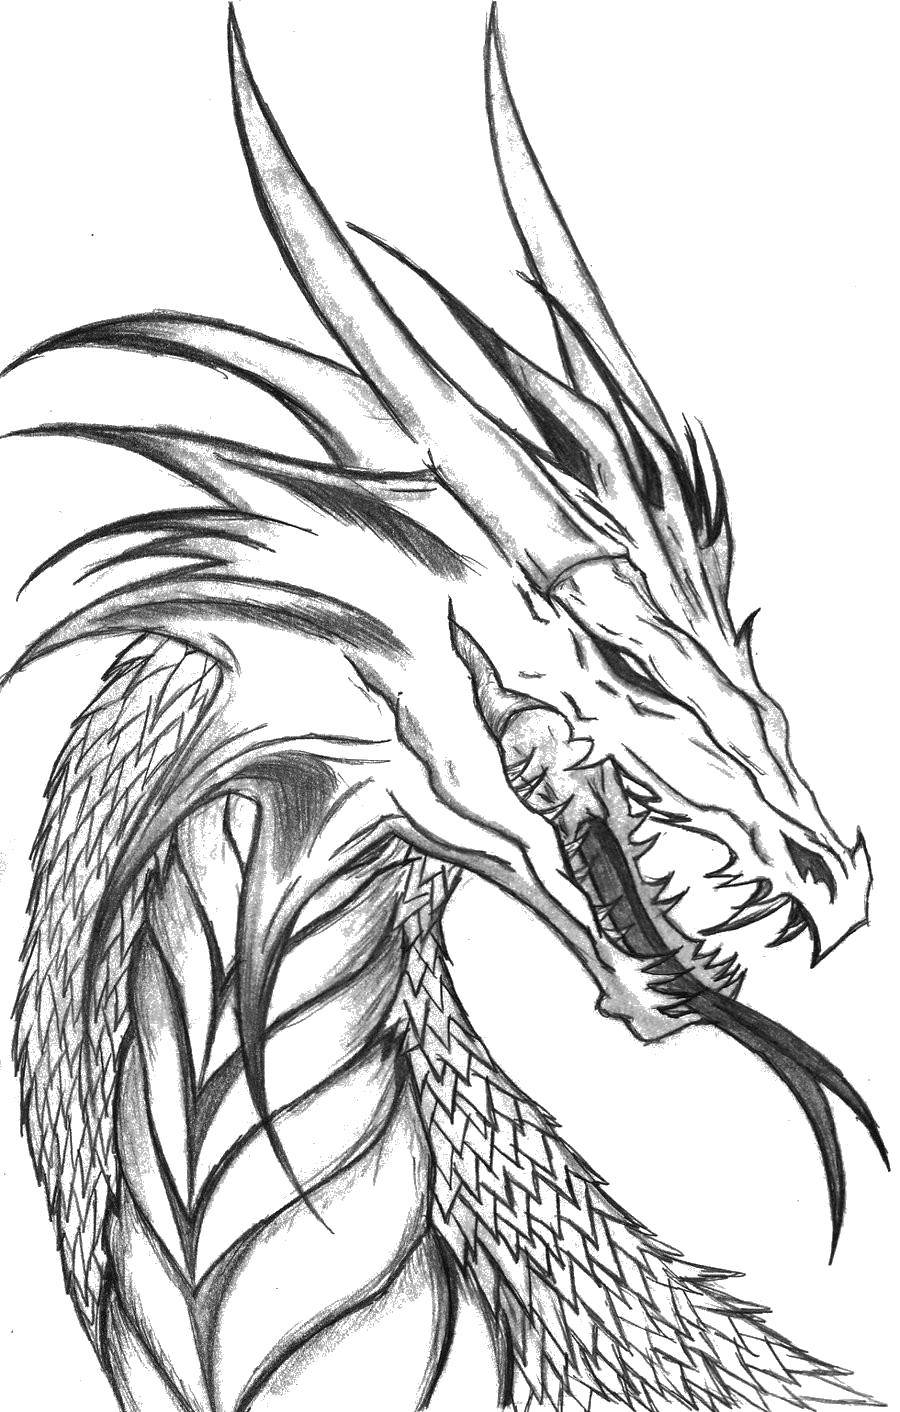 Coloring A terrible dragon.. Category Dragons. Tags:  Dragons.